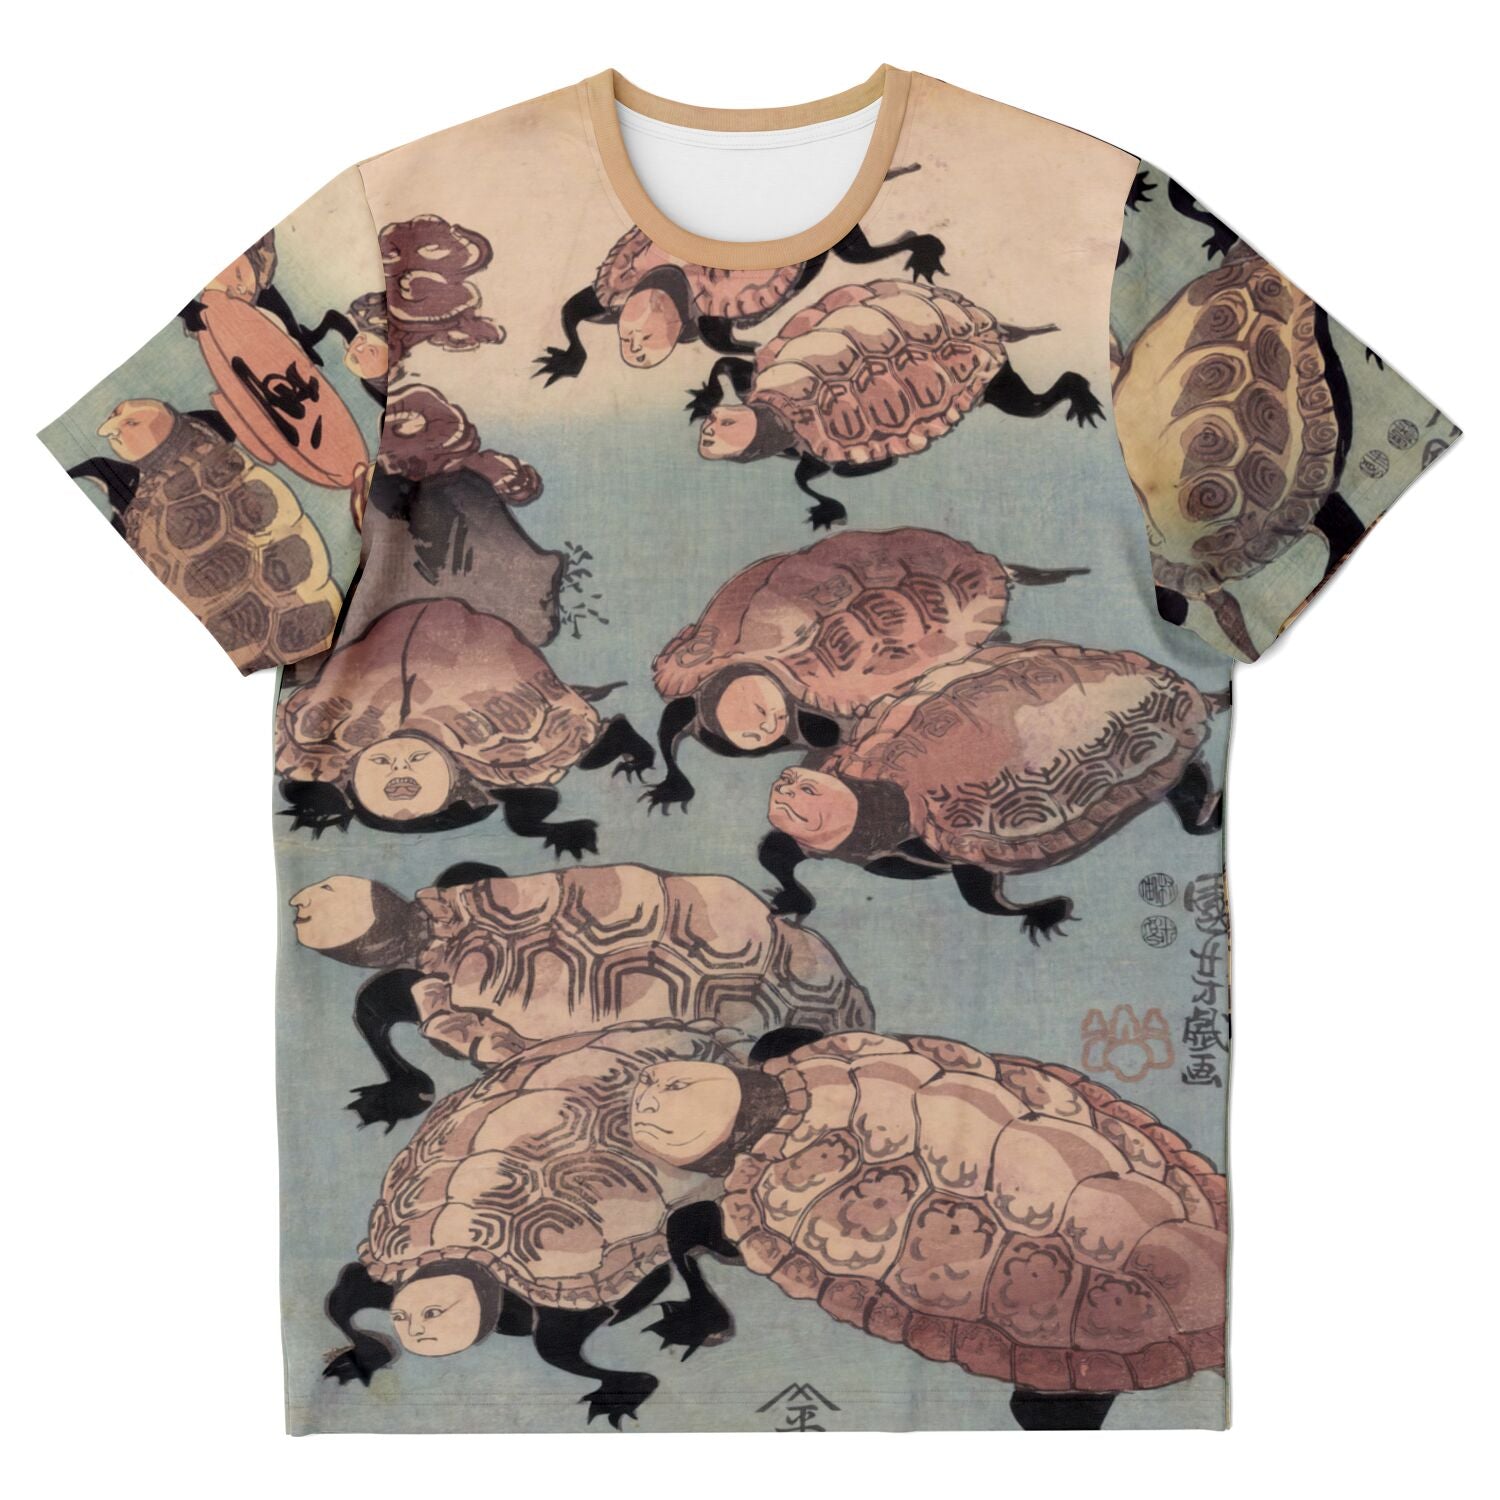 T-shirt XS Strange and Marvelous Turtles of Happiness | Kuniyoshi Ukiyo-E Kawai Tortoise Graphic Art T-Shirt